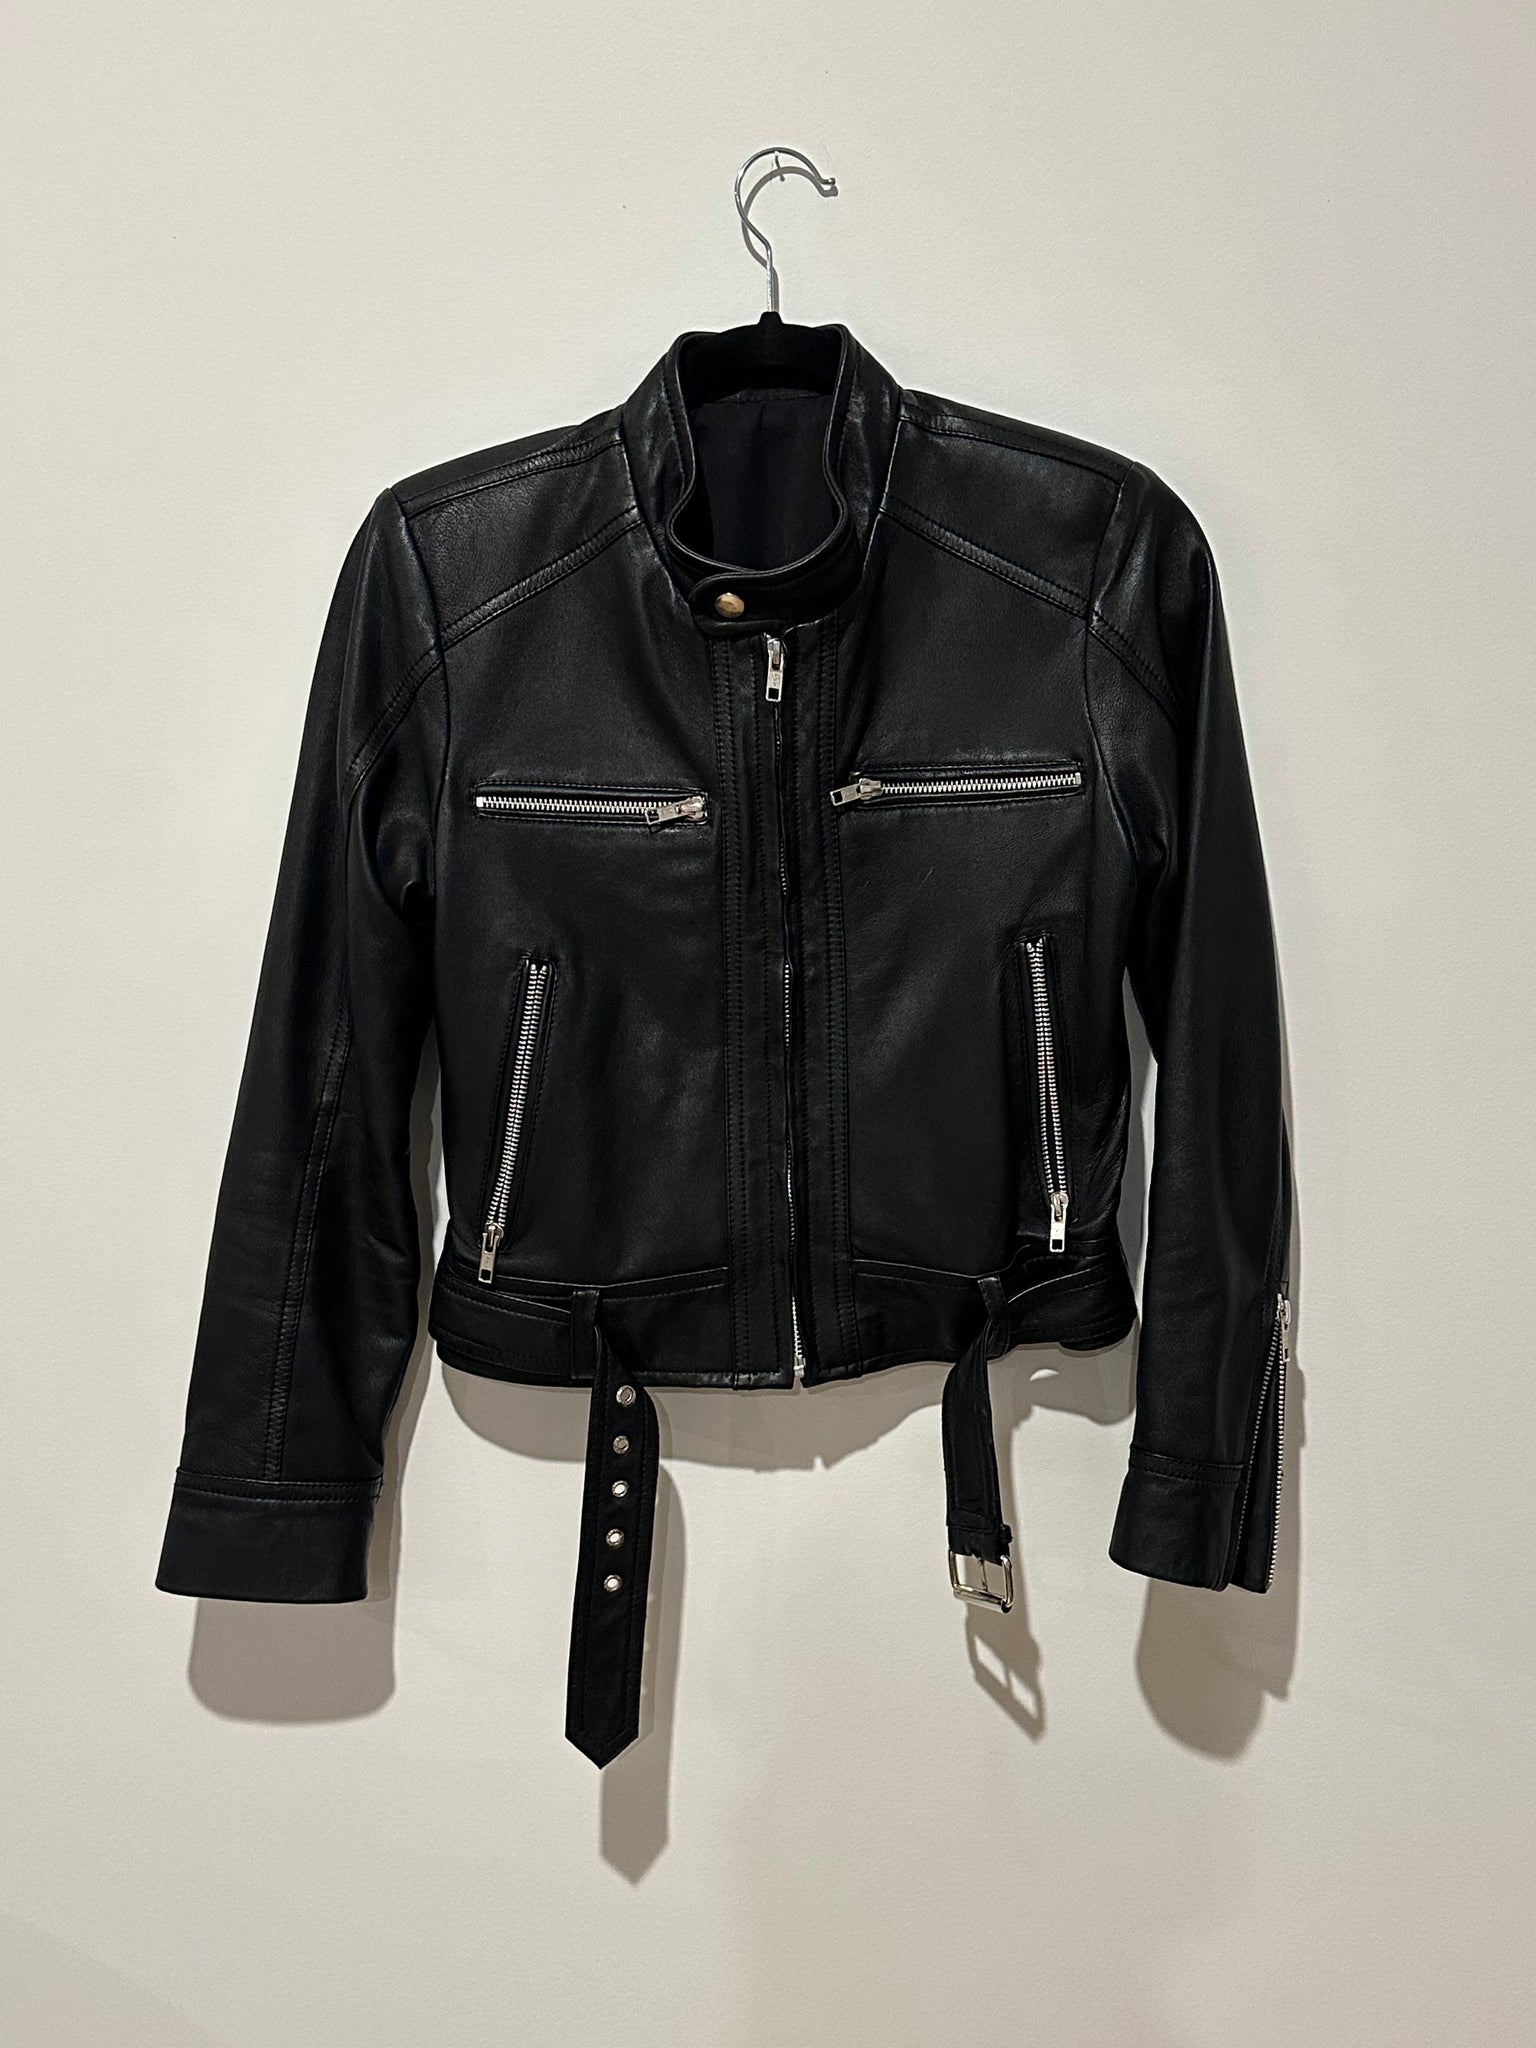 The Jacket - Black